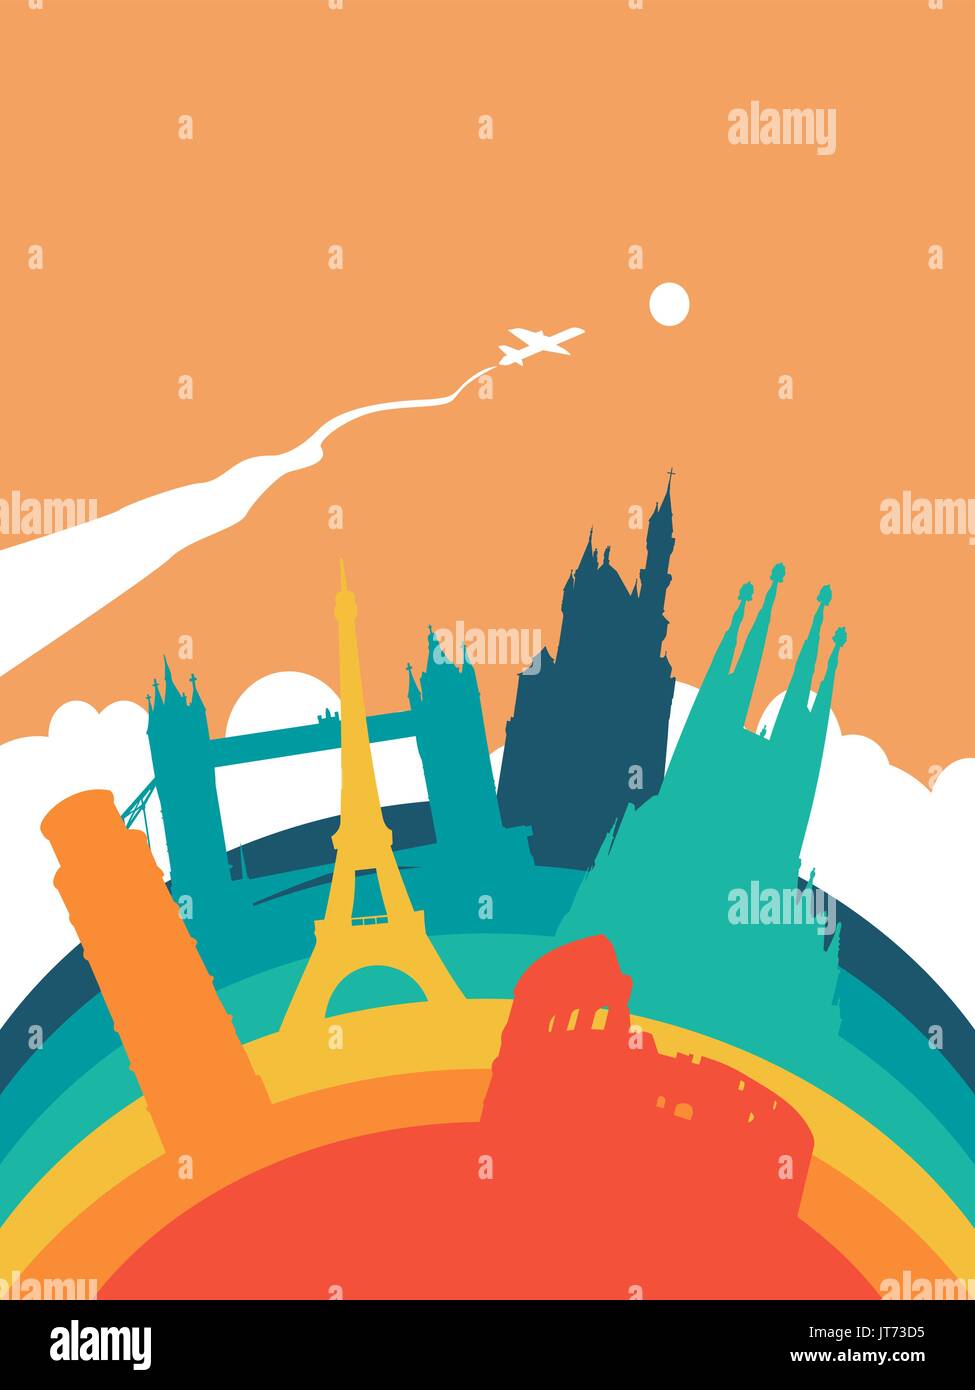 Travel Europe landscape illustration, European world landmarks. Includes Eiffel tower, London bridge, Rome coliseum. EPS10 vector. Stock Vector